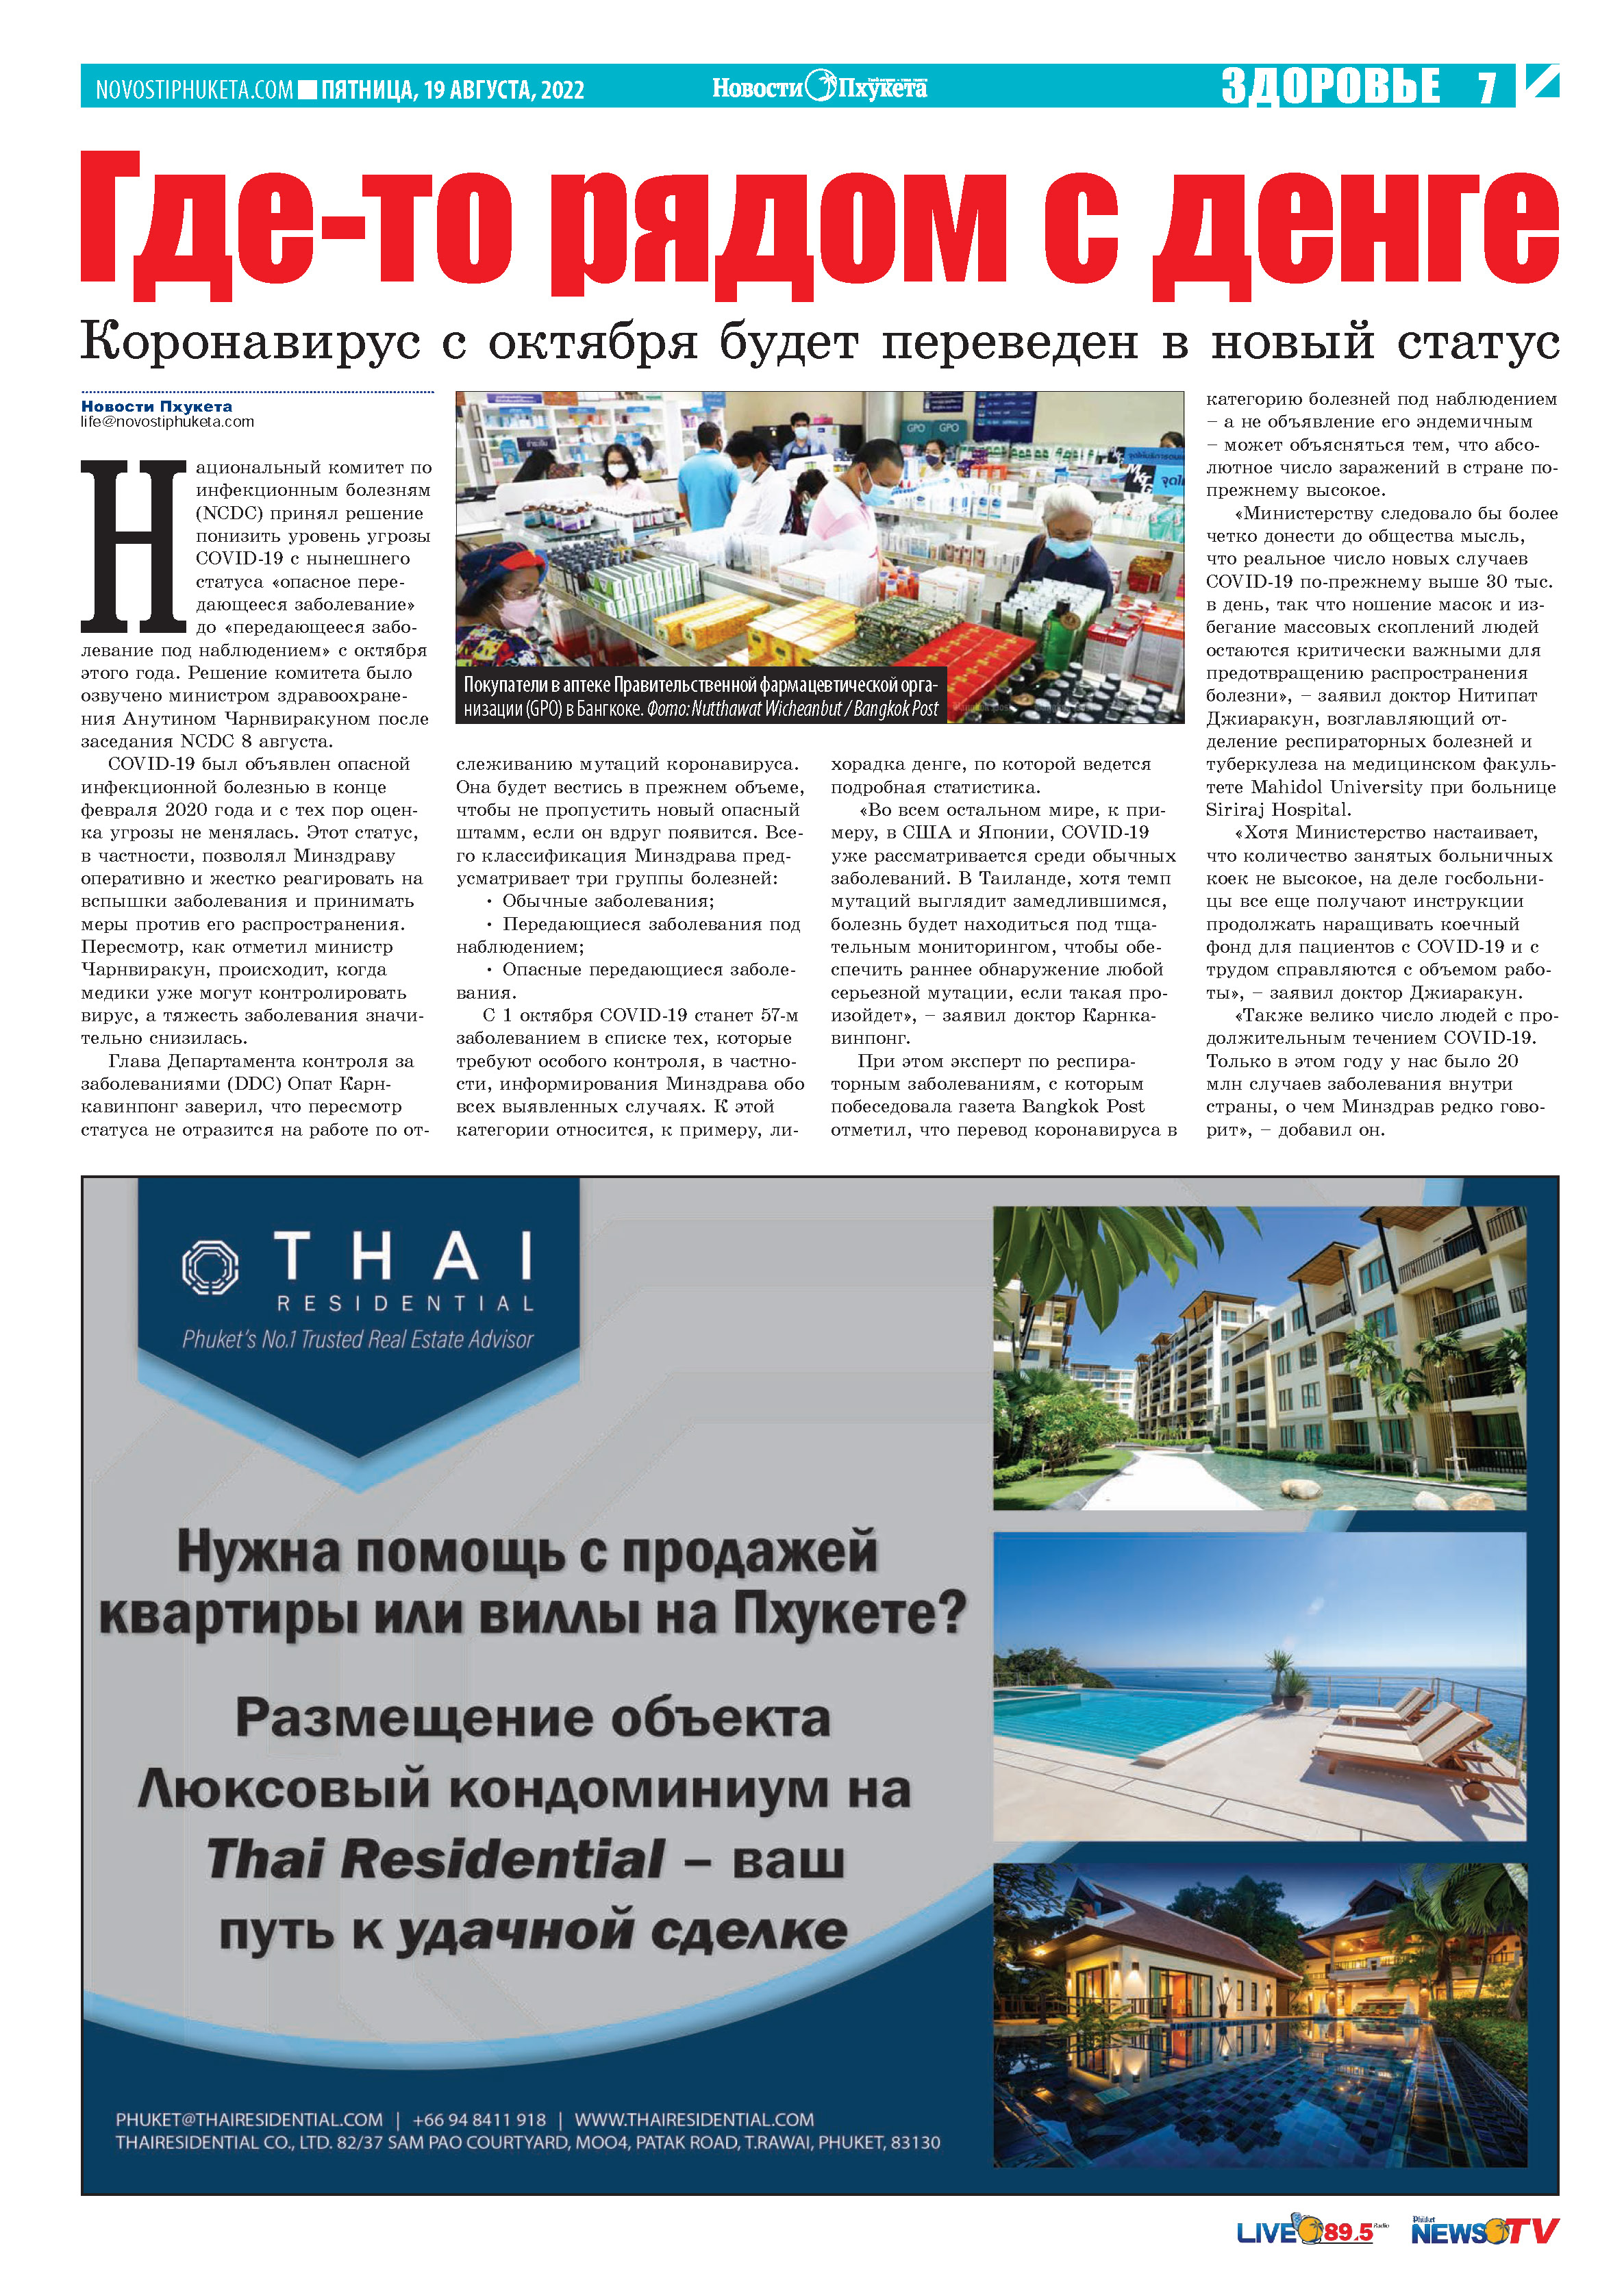 Phuket Newspaper - https://www.novostiphuketa.com/archive/19-08-2022/19-08-2022_Page_07.jpg